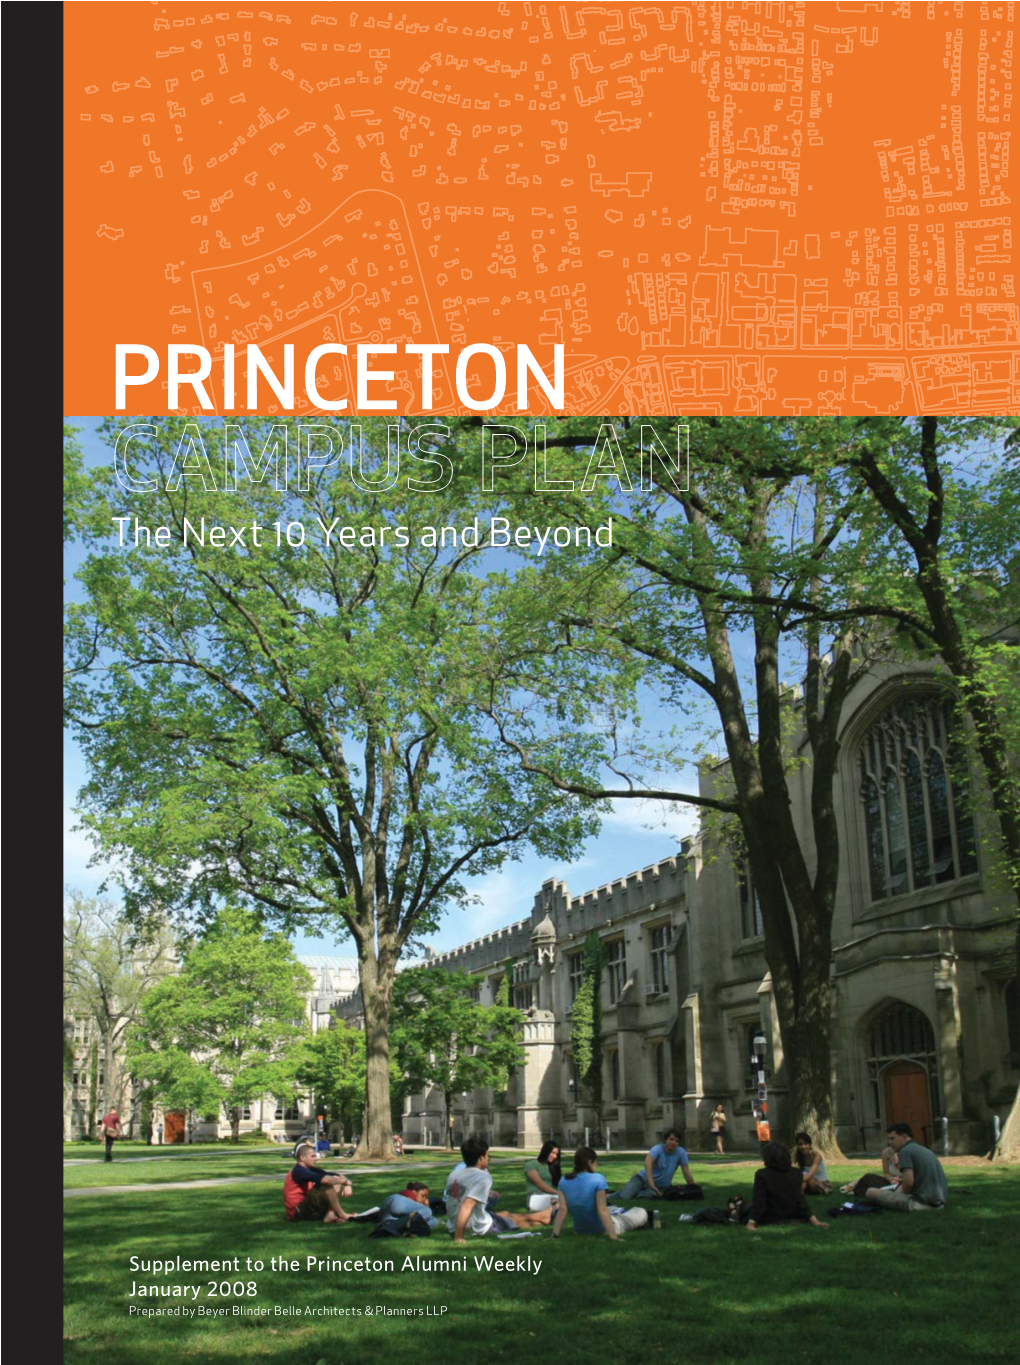 PRINCETON CAMPUS PLAN the Next 10 Years and Beyond